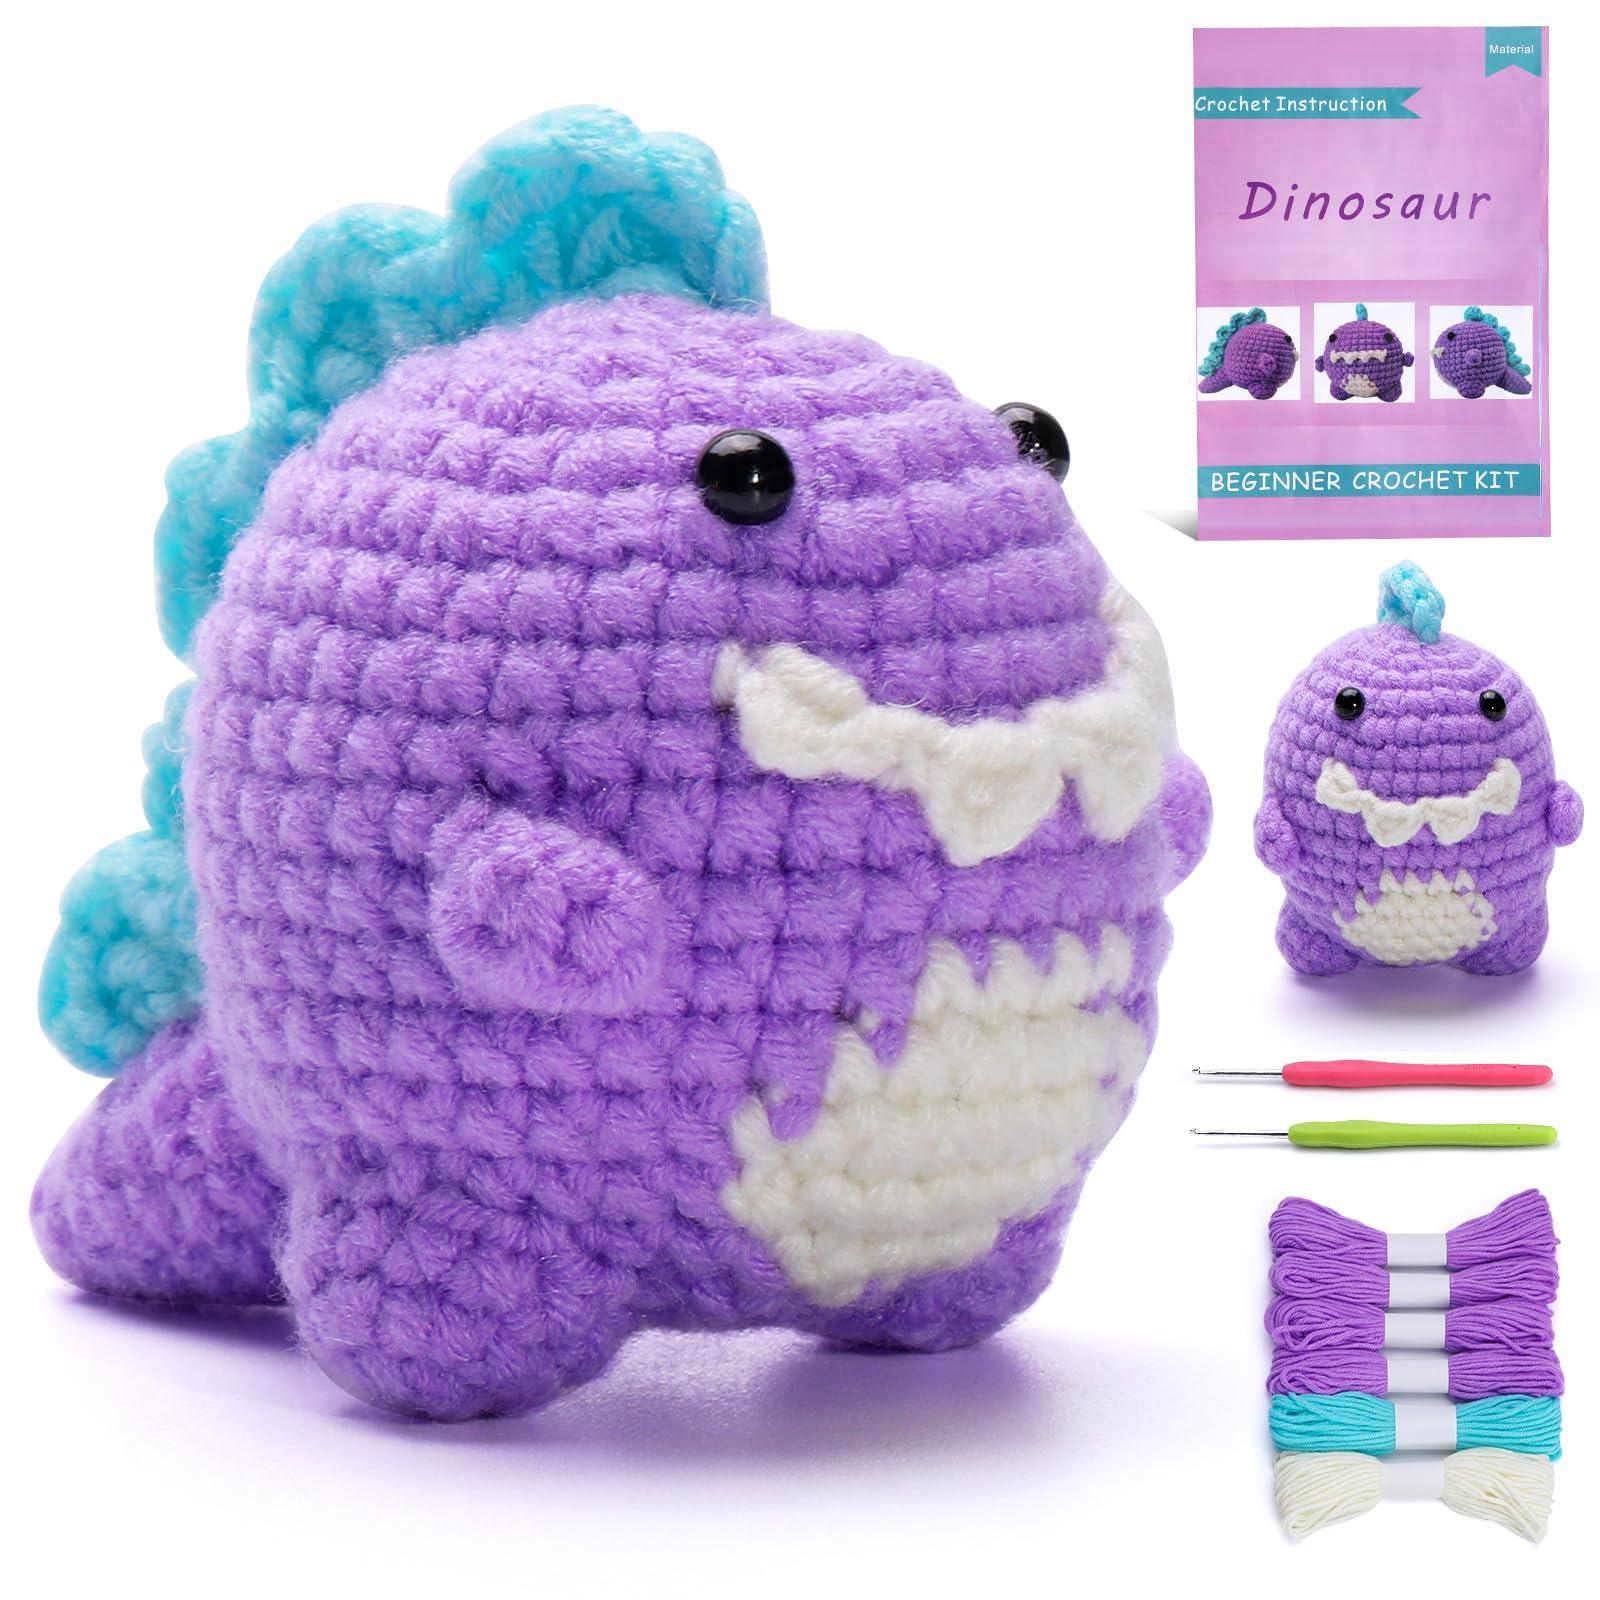 Tony the Dino Complete Crochet Kit